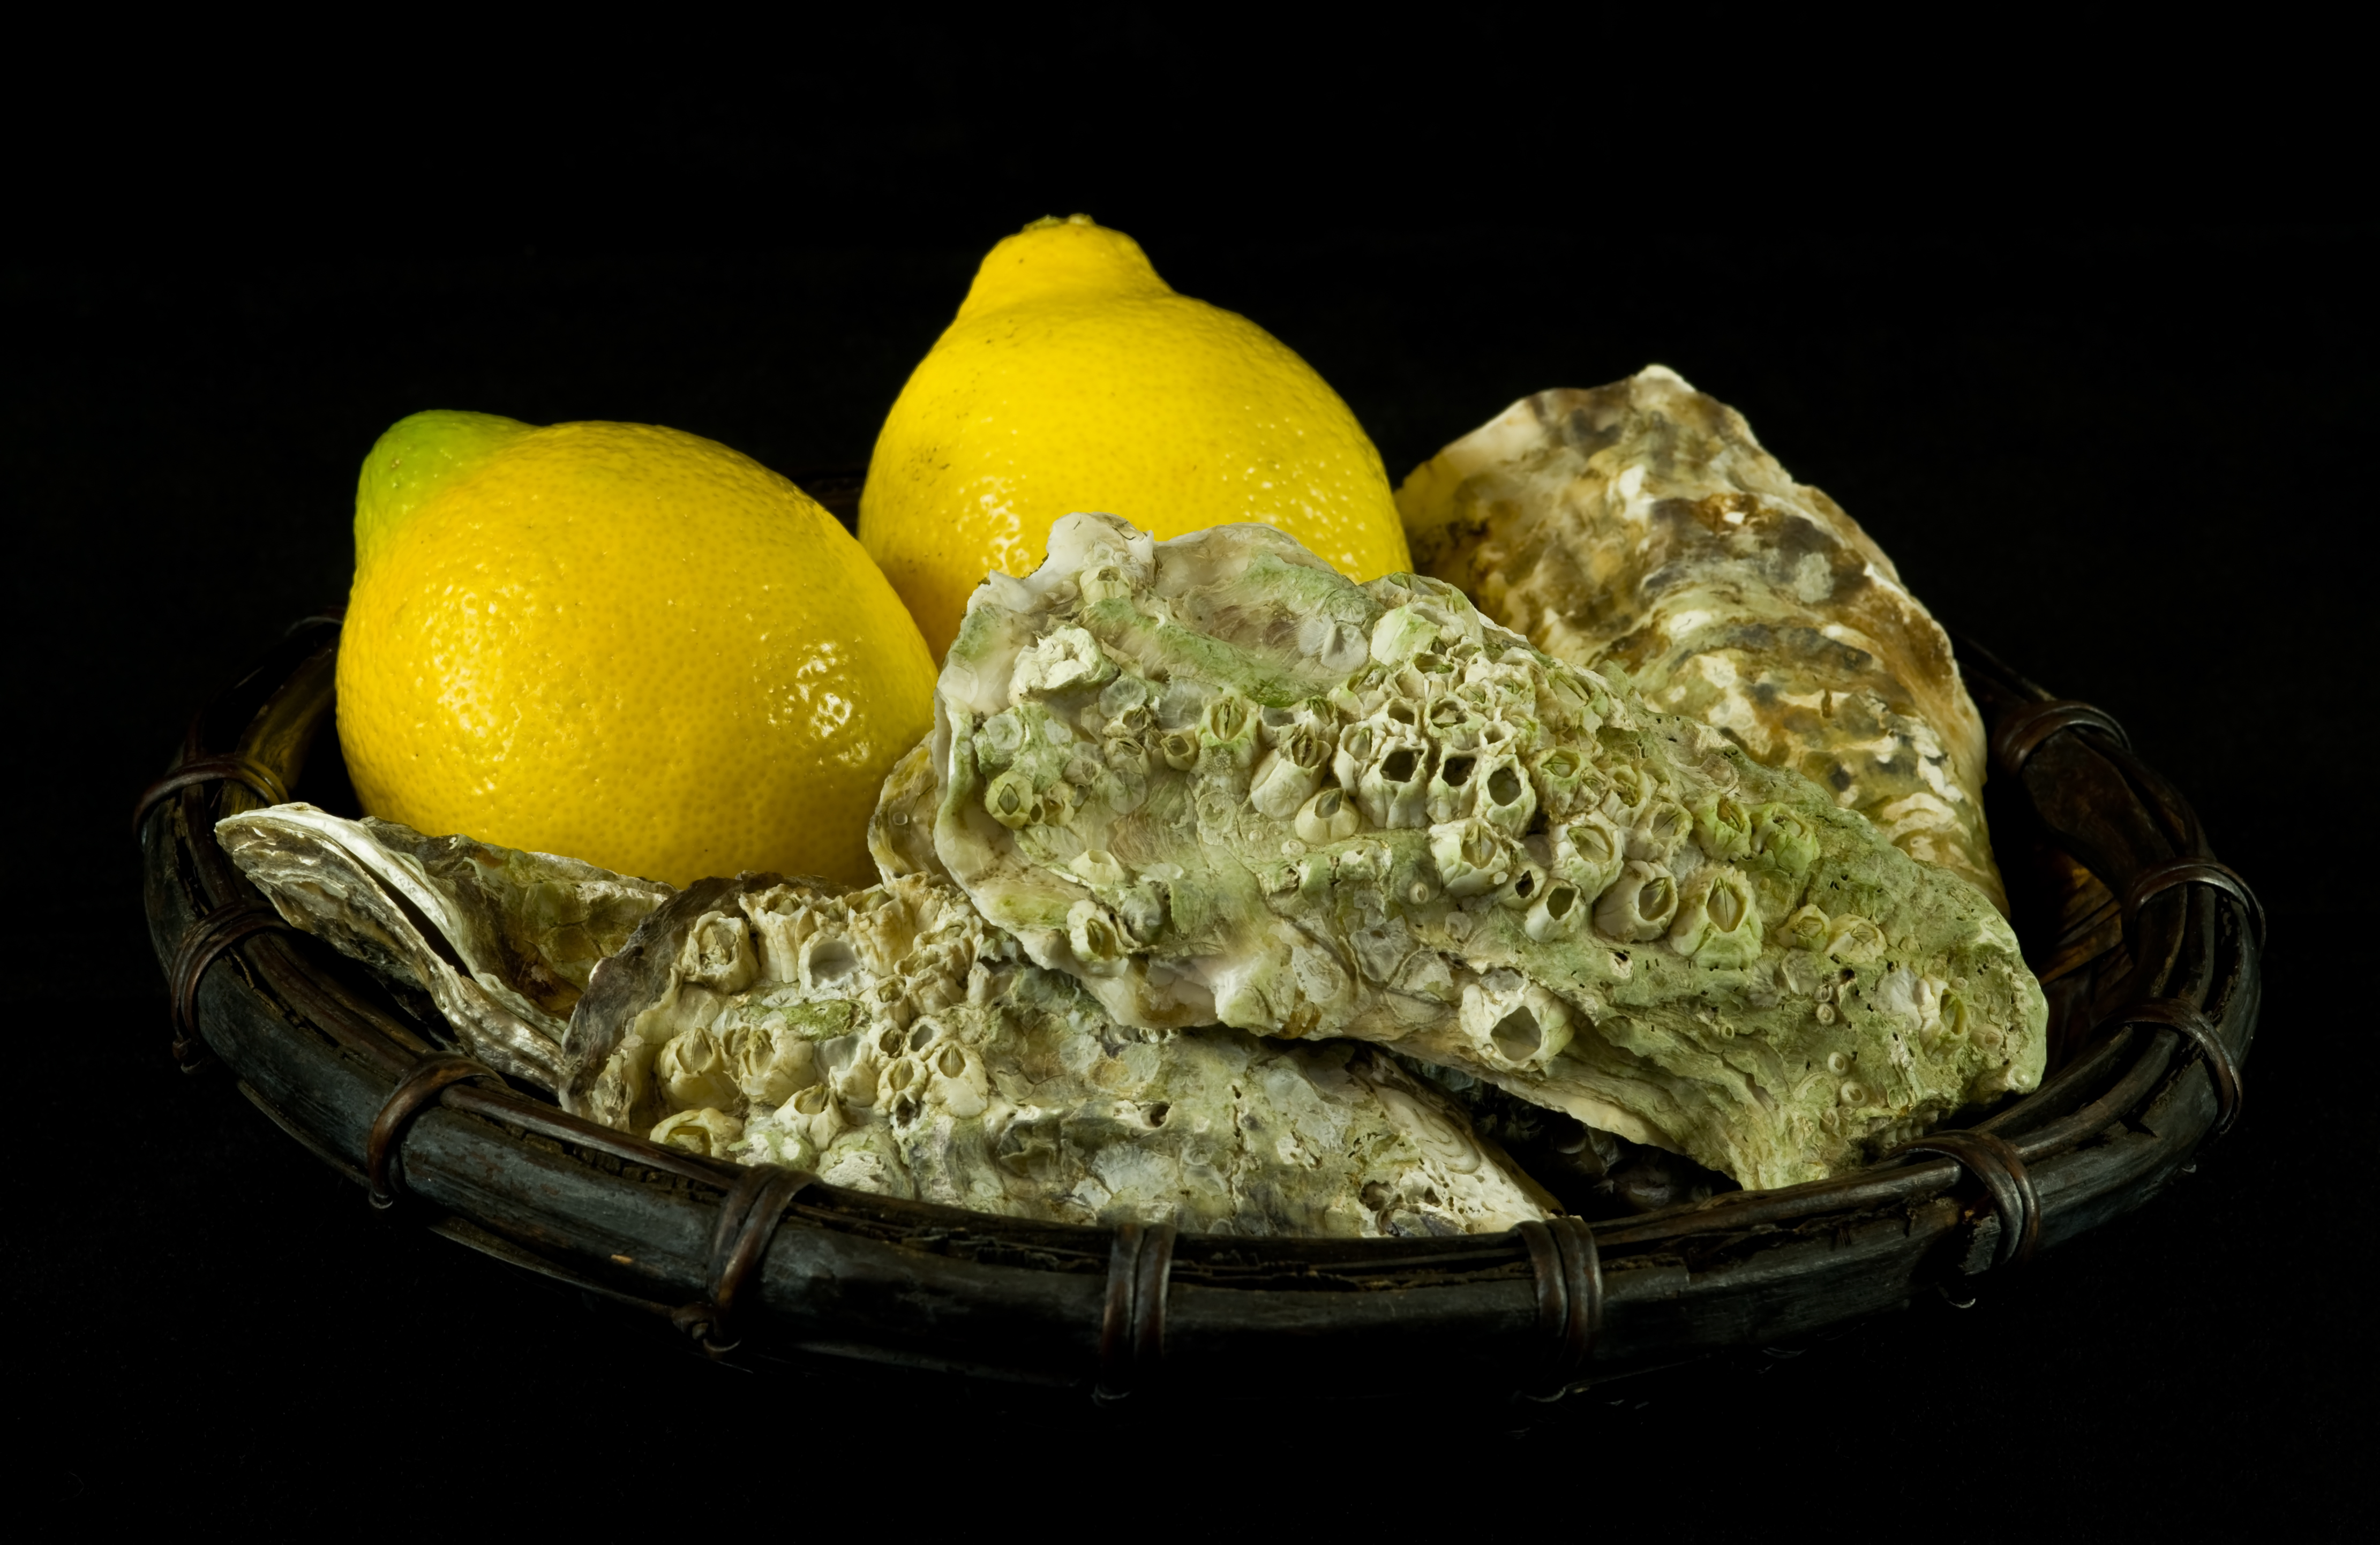 Oysters lemons basket